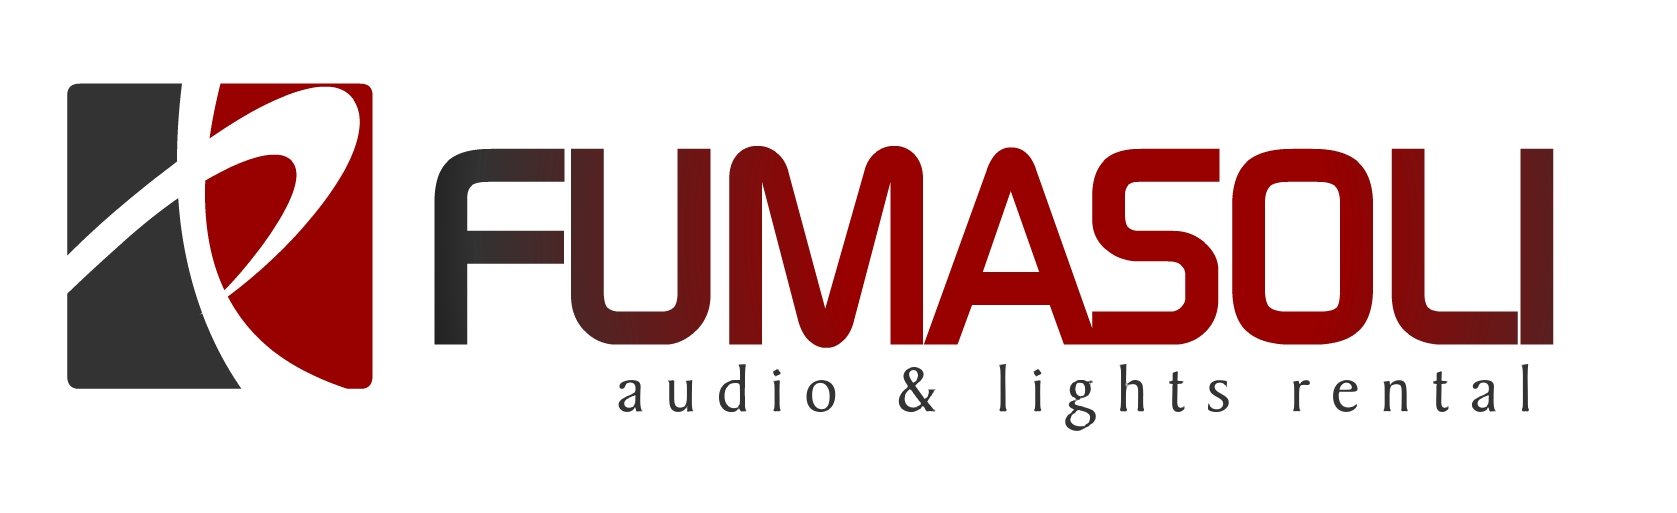 Gallery fumasoli audio & lights rental